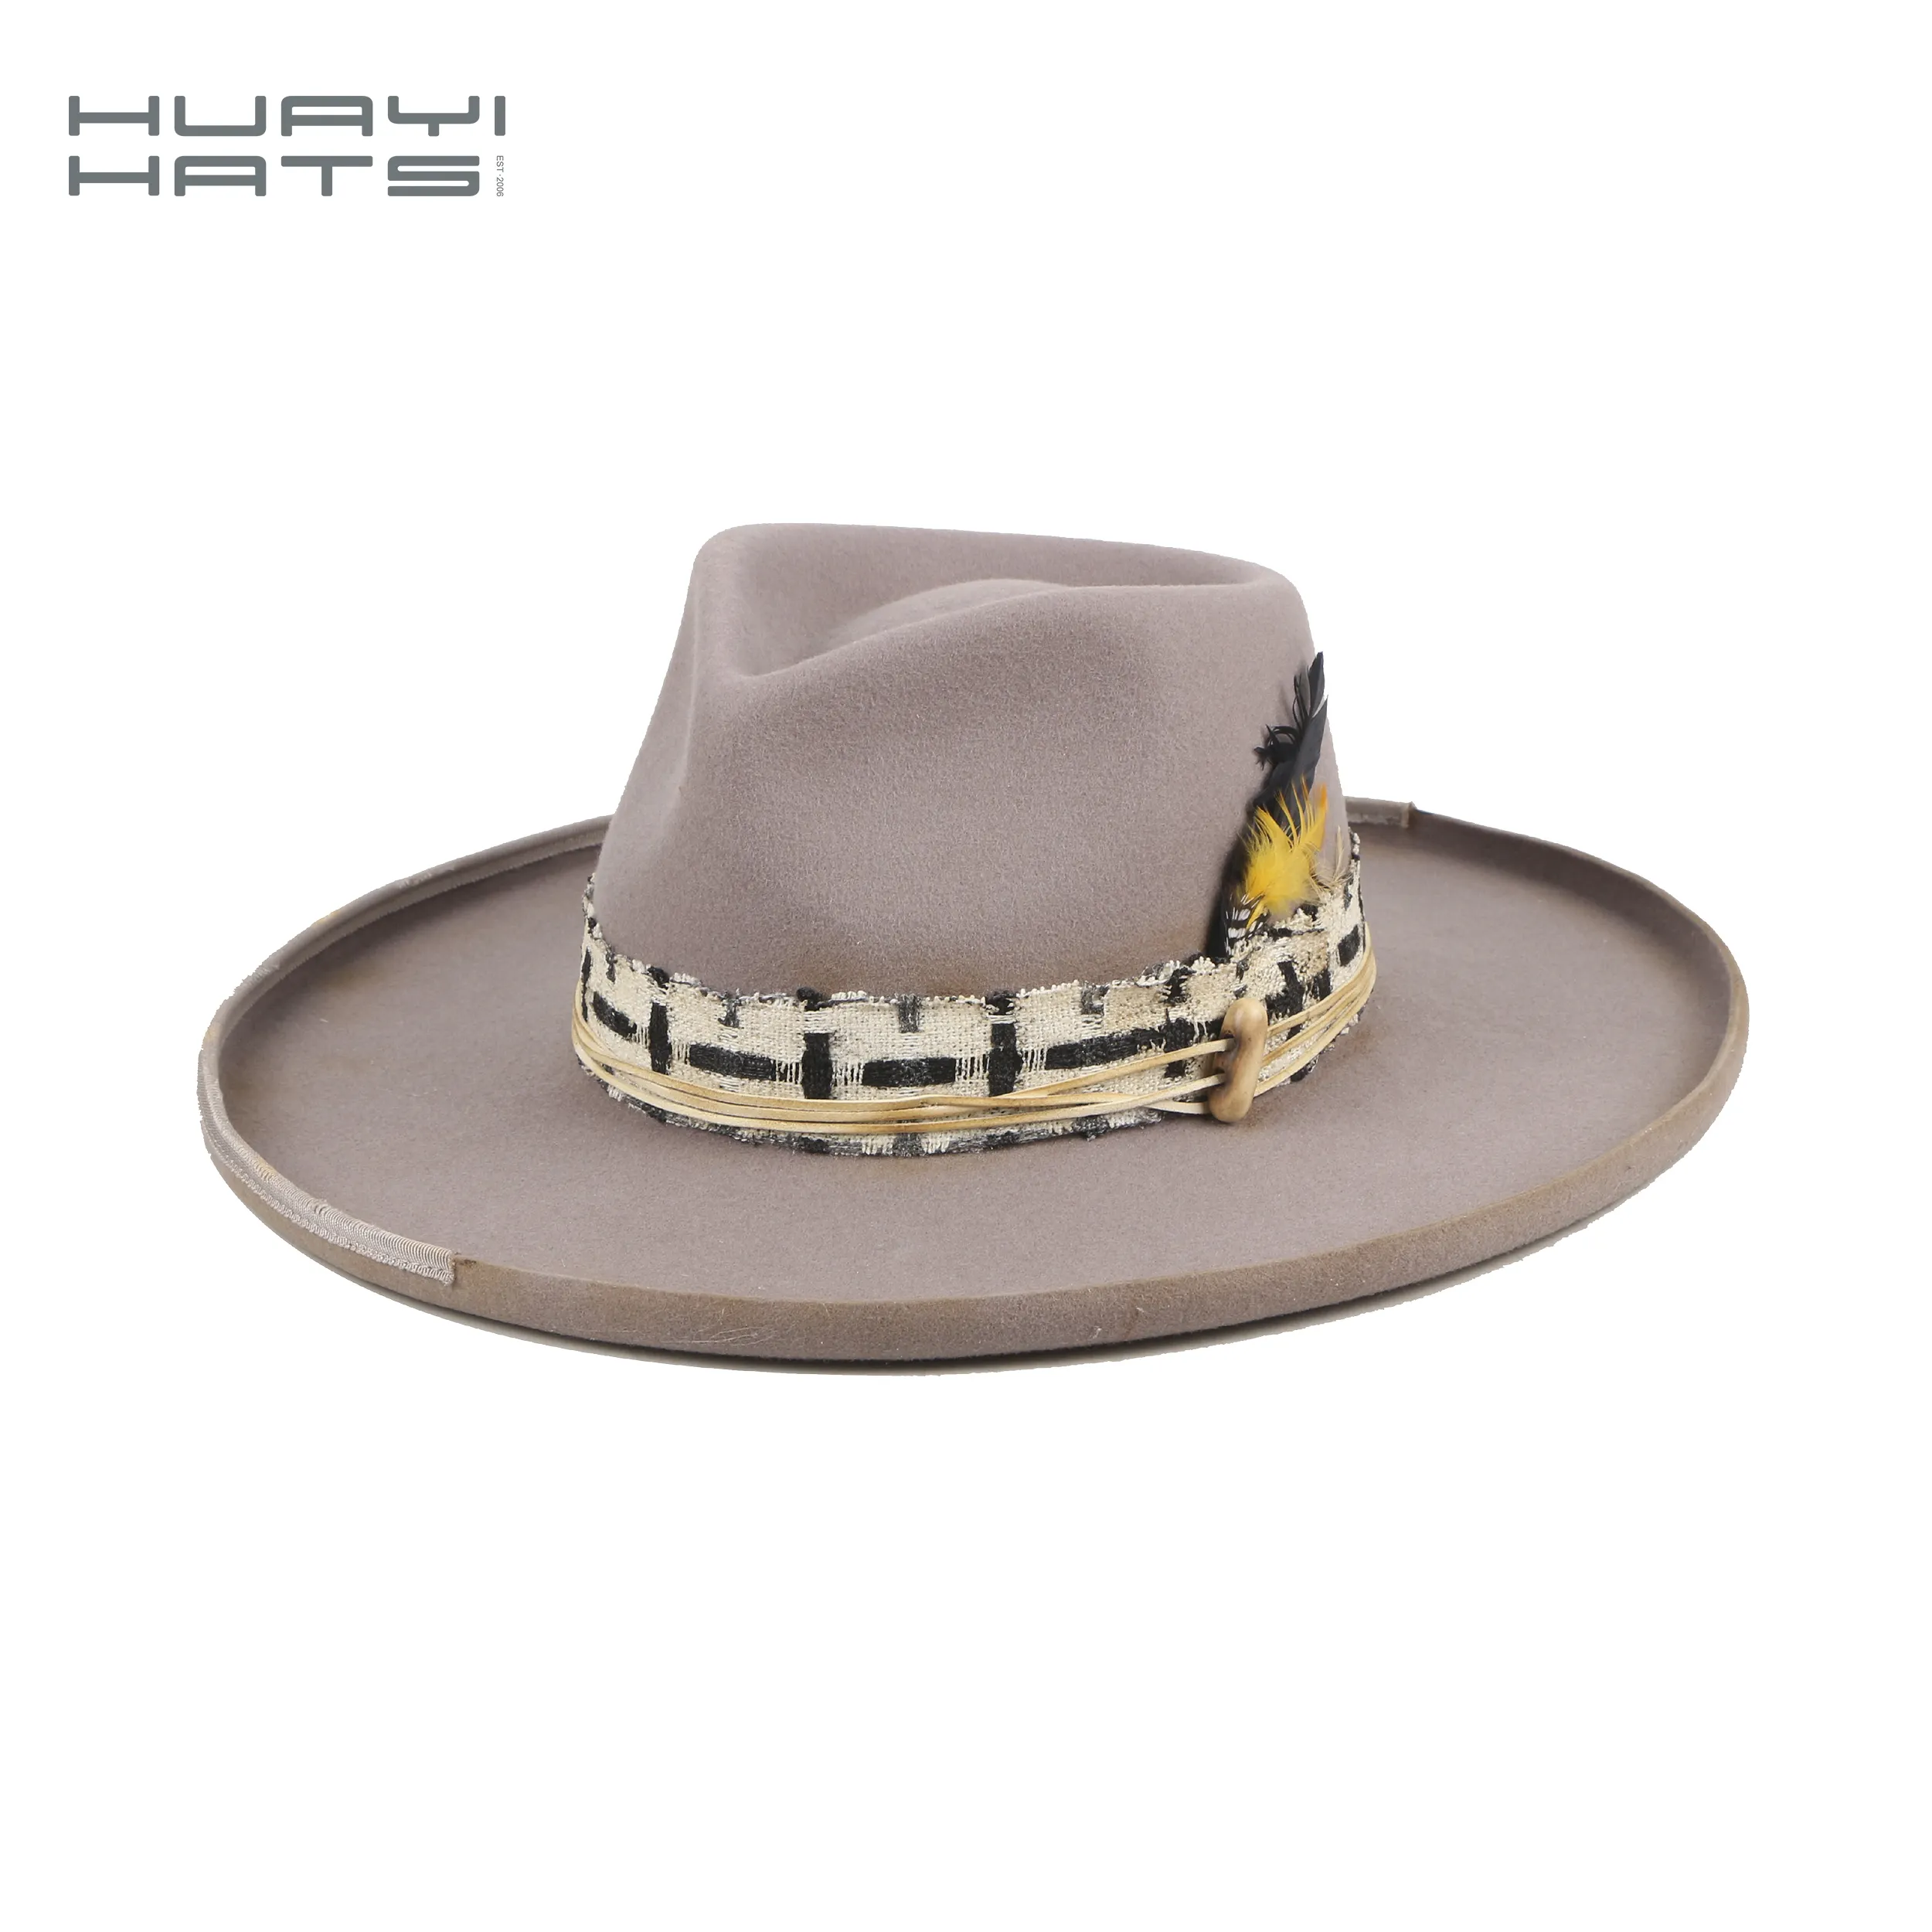 Huayihats custom indiana jones men's wool felt fedora hat with hat band accessory wide brim hat